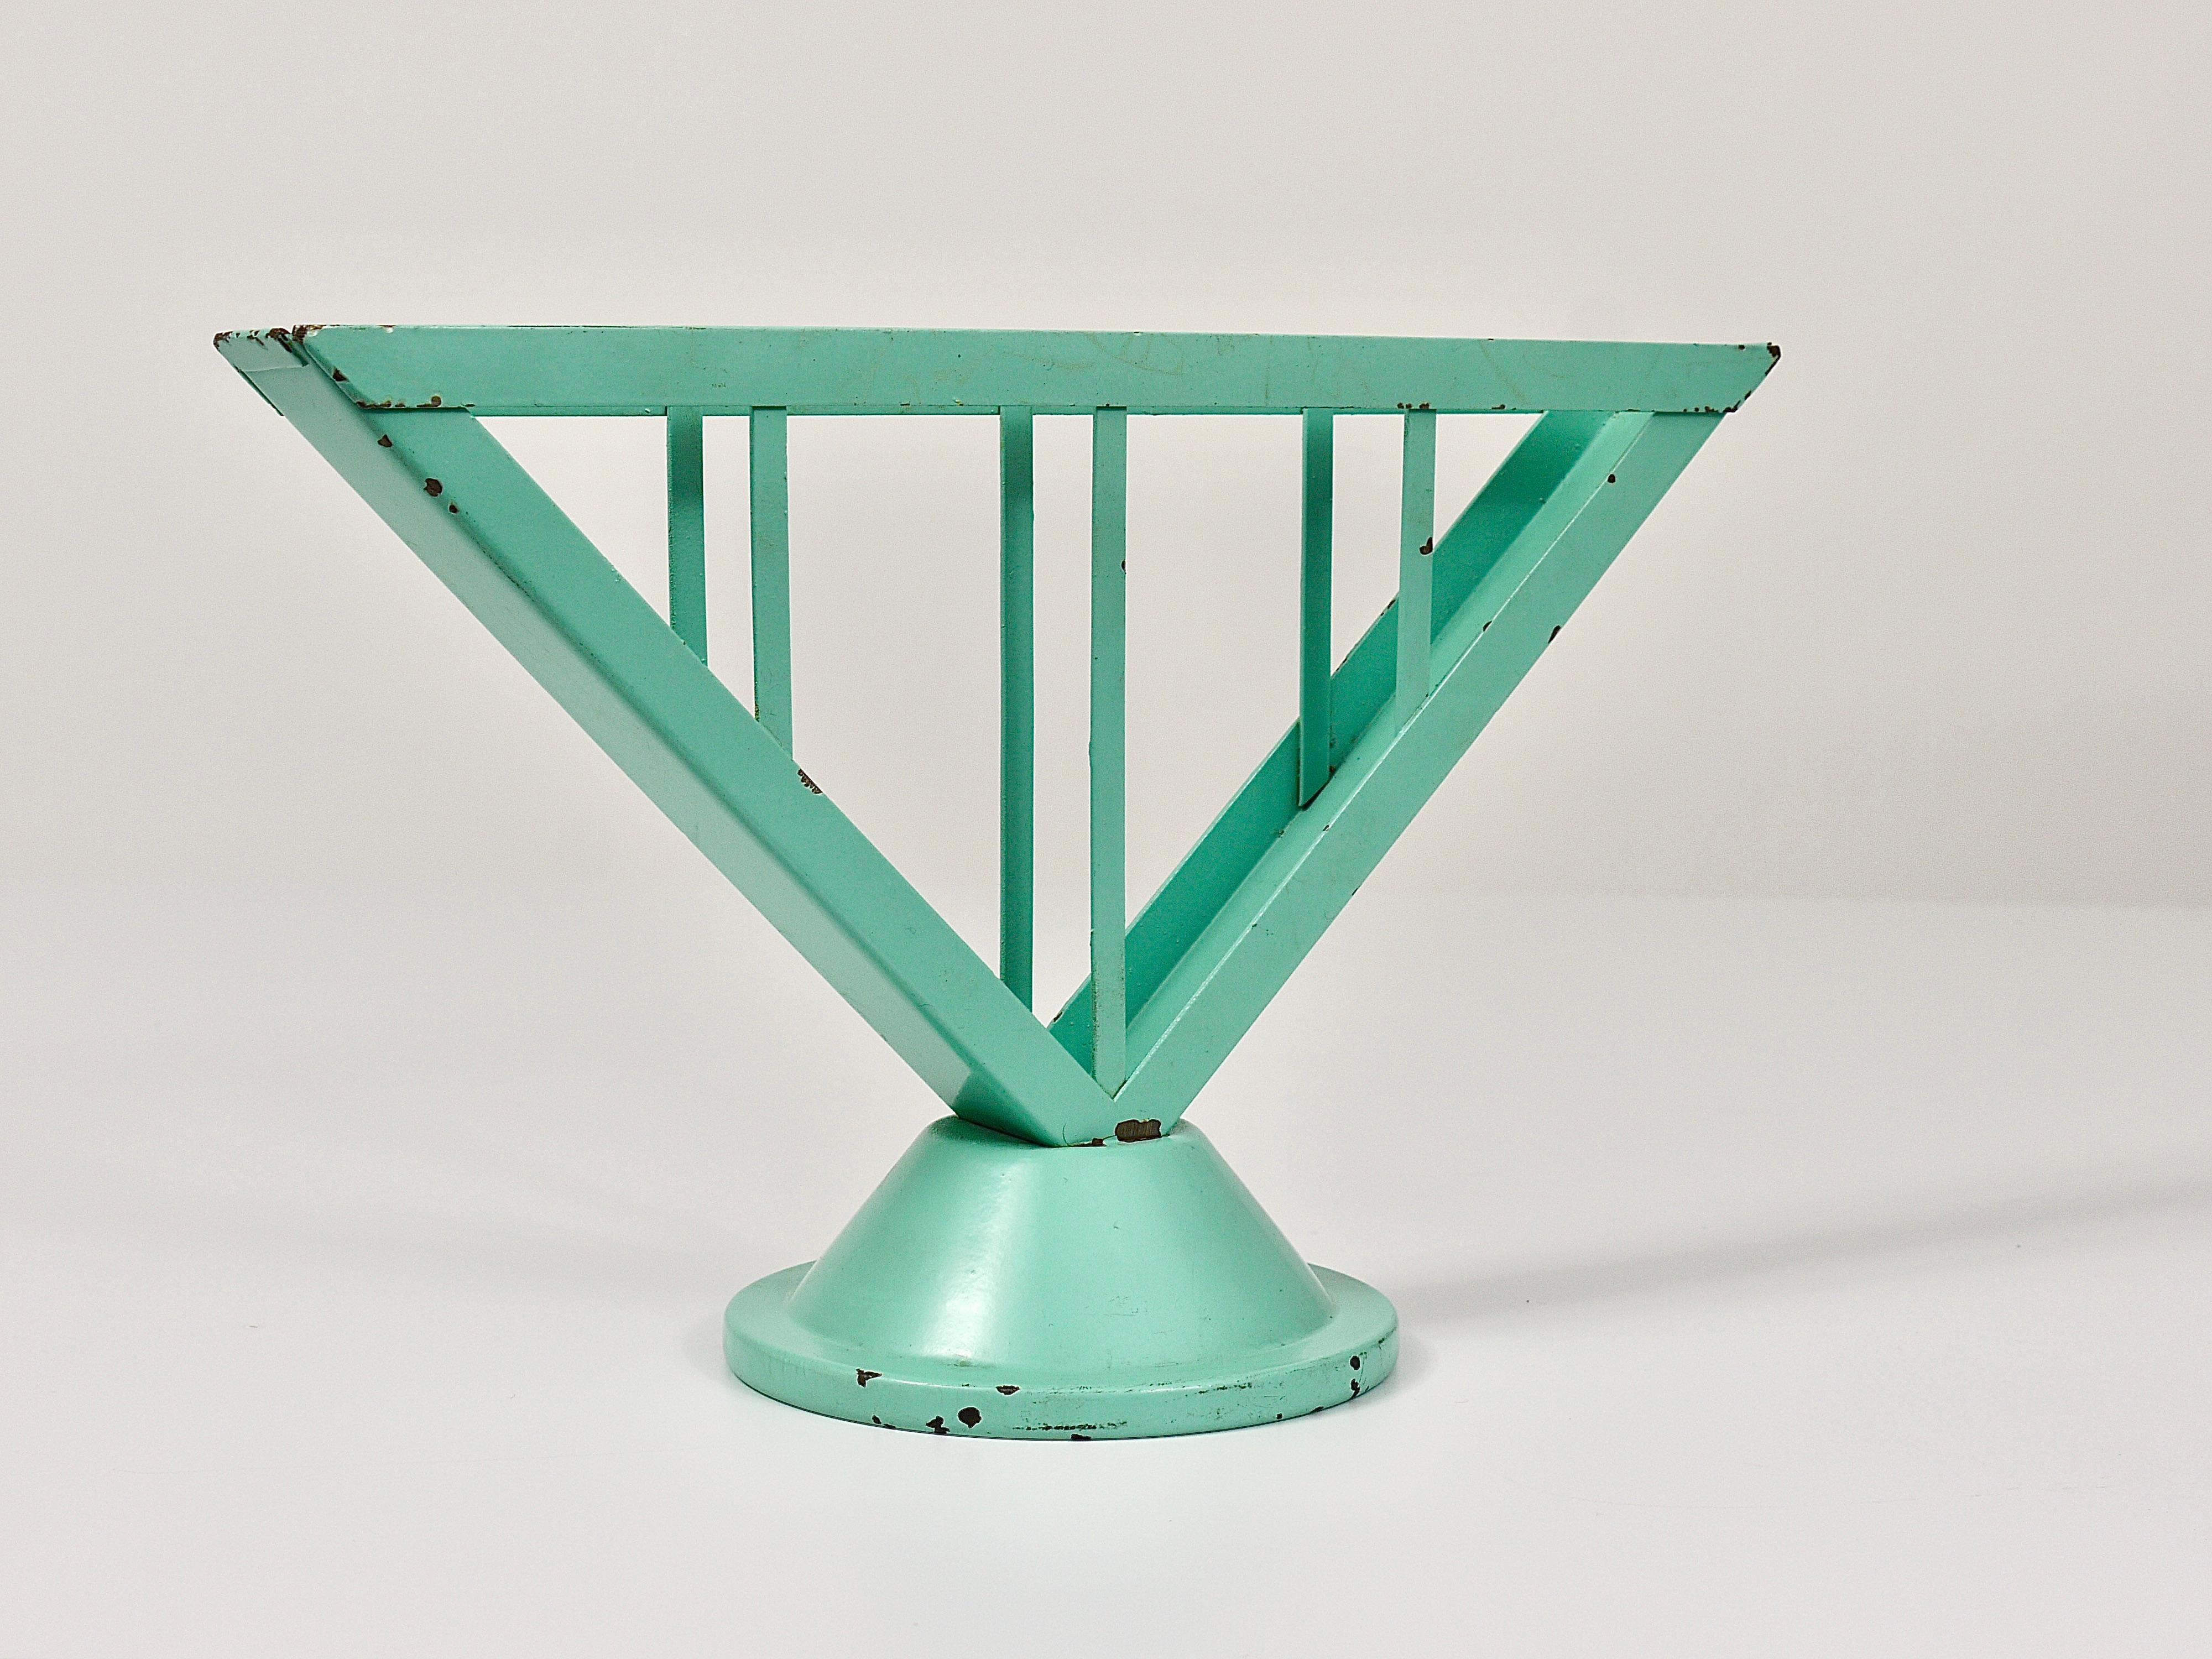 Decorative Green Marianne Brandt Avantgarde Bauhaus Napkin Holder, Ruppel, 1930s For Sale 1